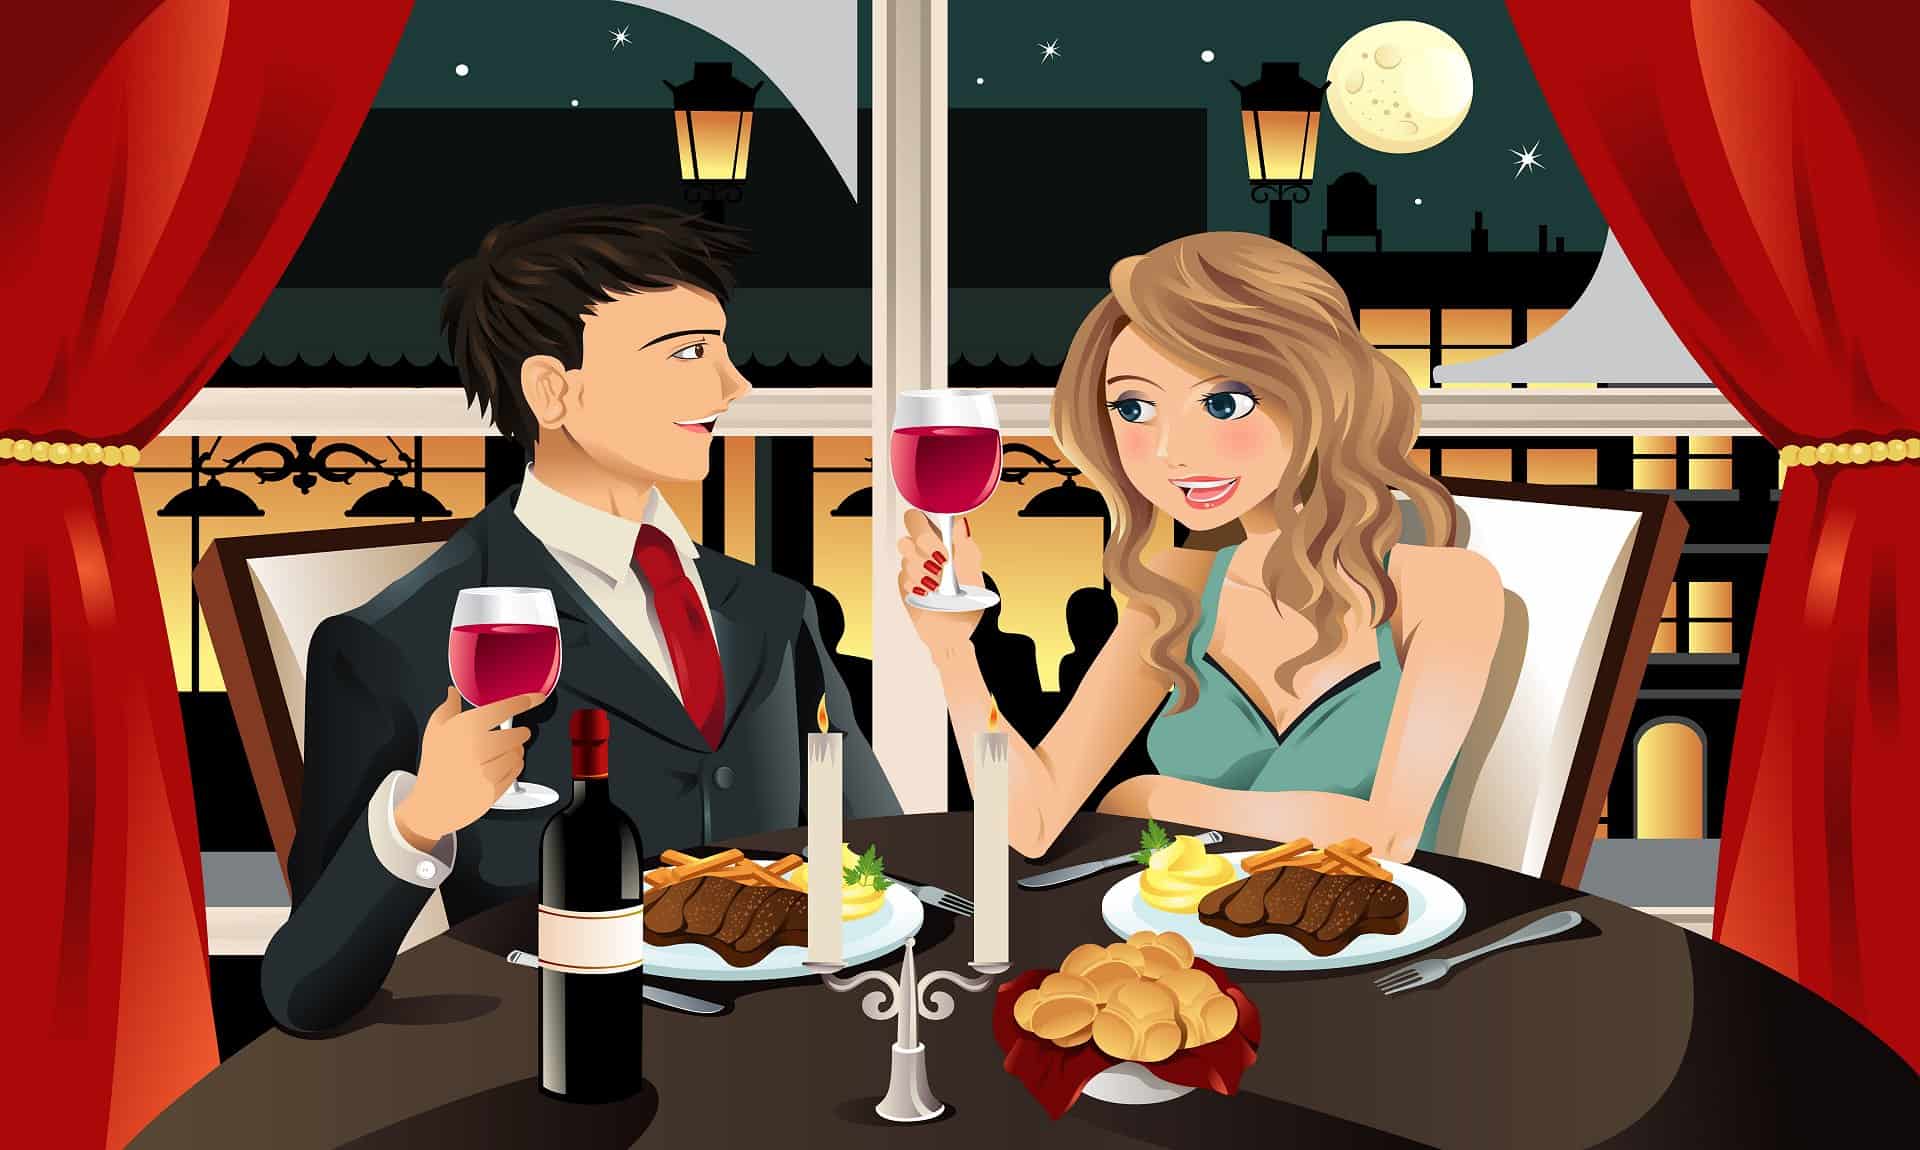 Мужчина пригласил в ресторан. Романтический ужин в ресторане иллюстрации. Свидание иллюстрация. Пара в ресторане. Свидание в ресторане.